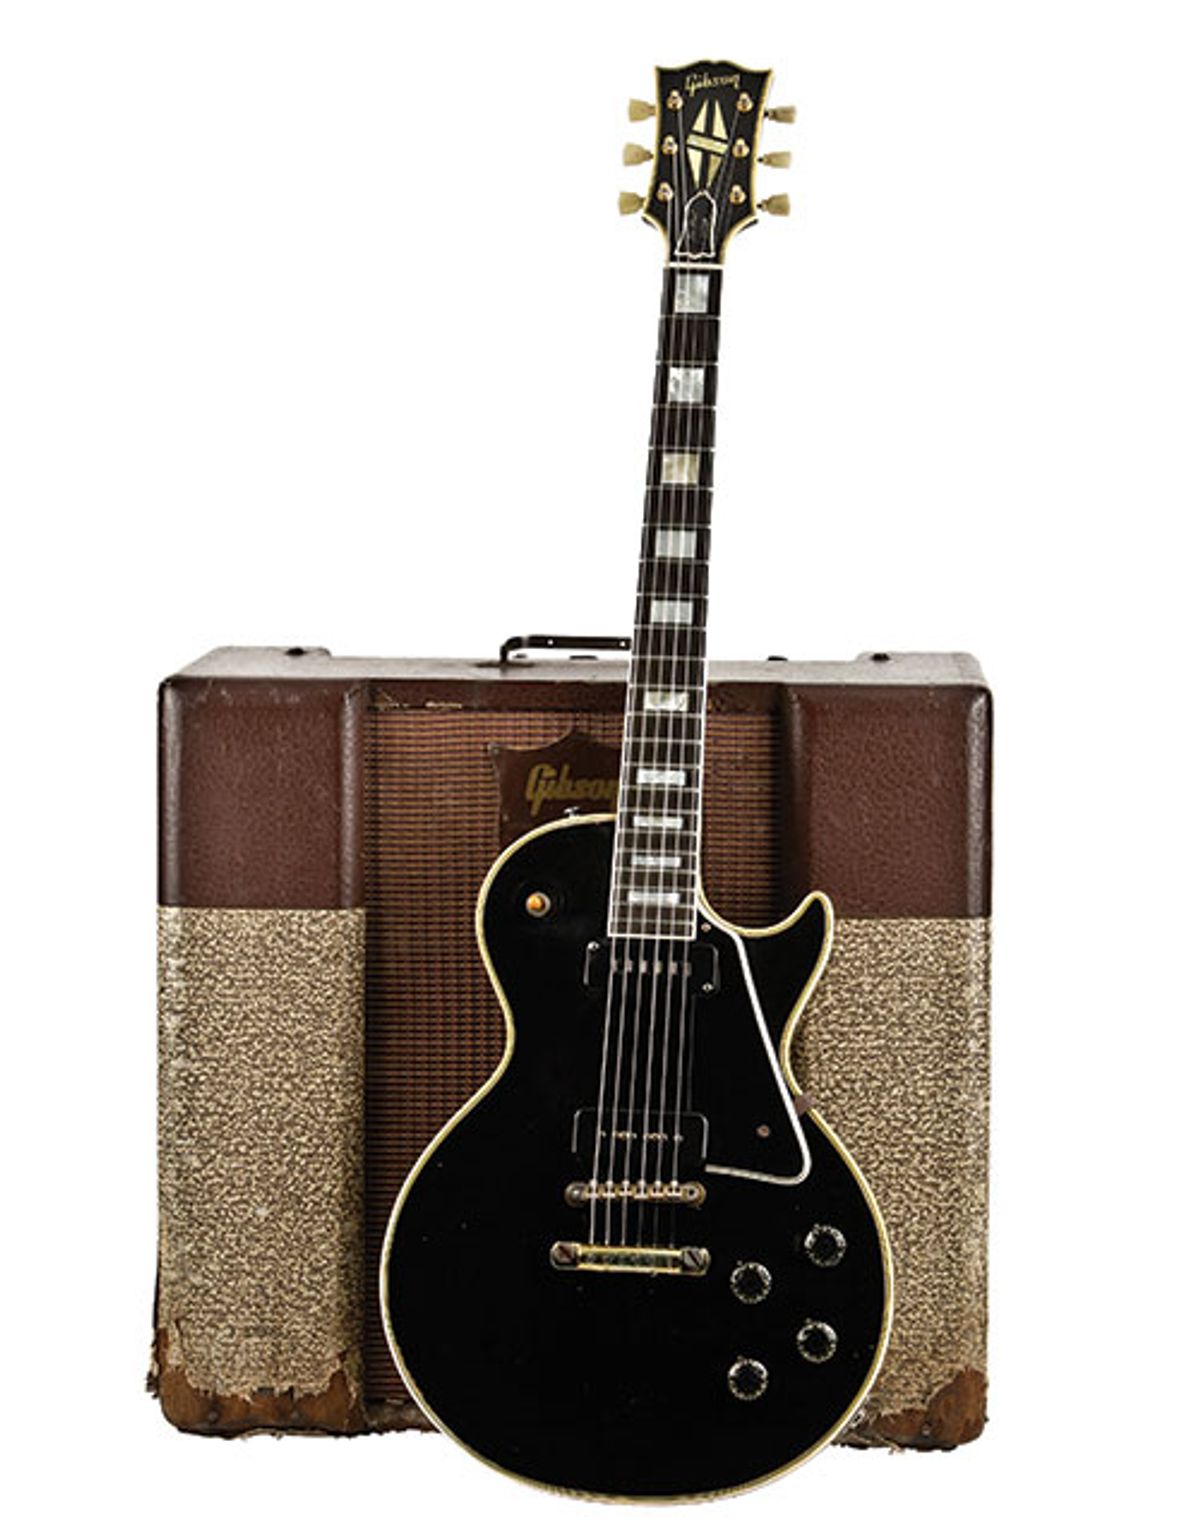 1955 Gibson Les Paul Custom and 1956 Gibson GA-70